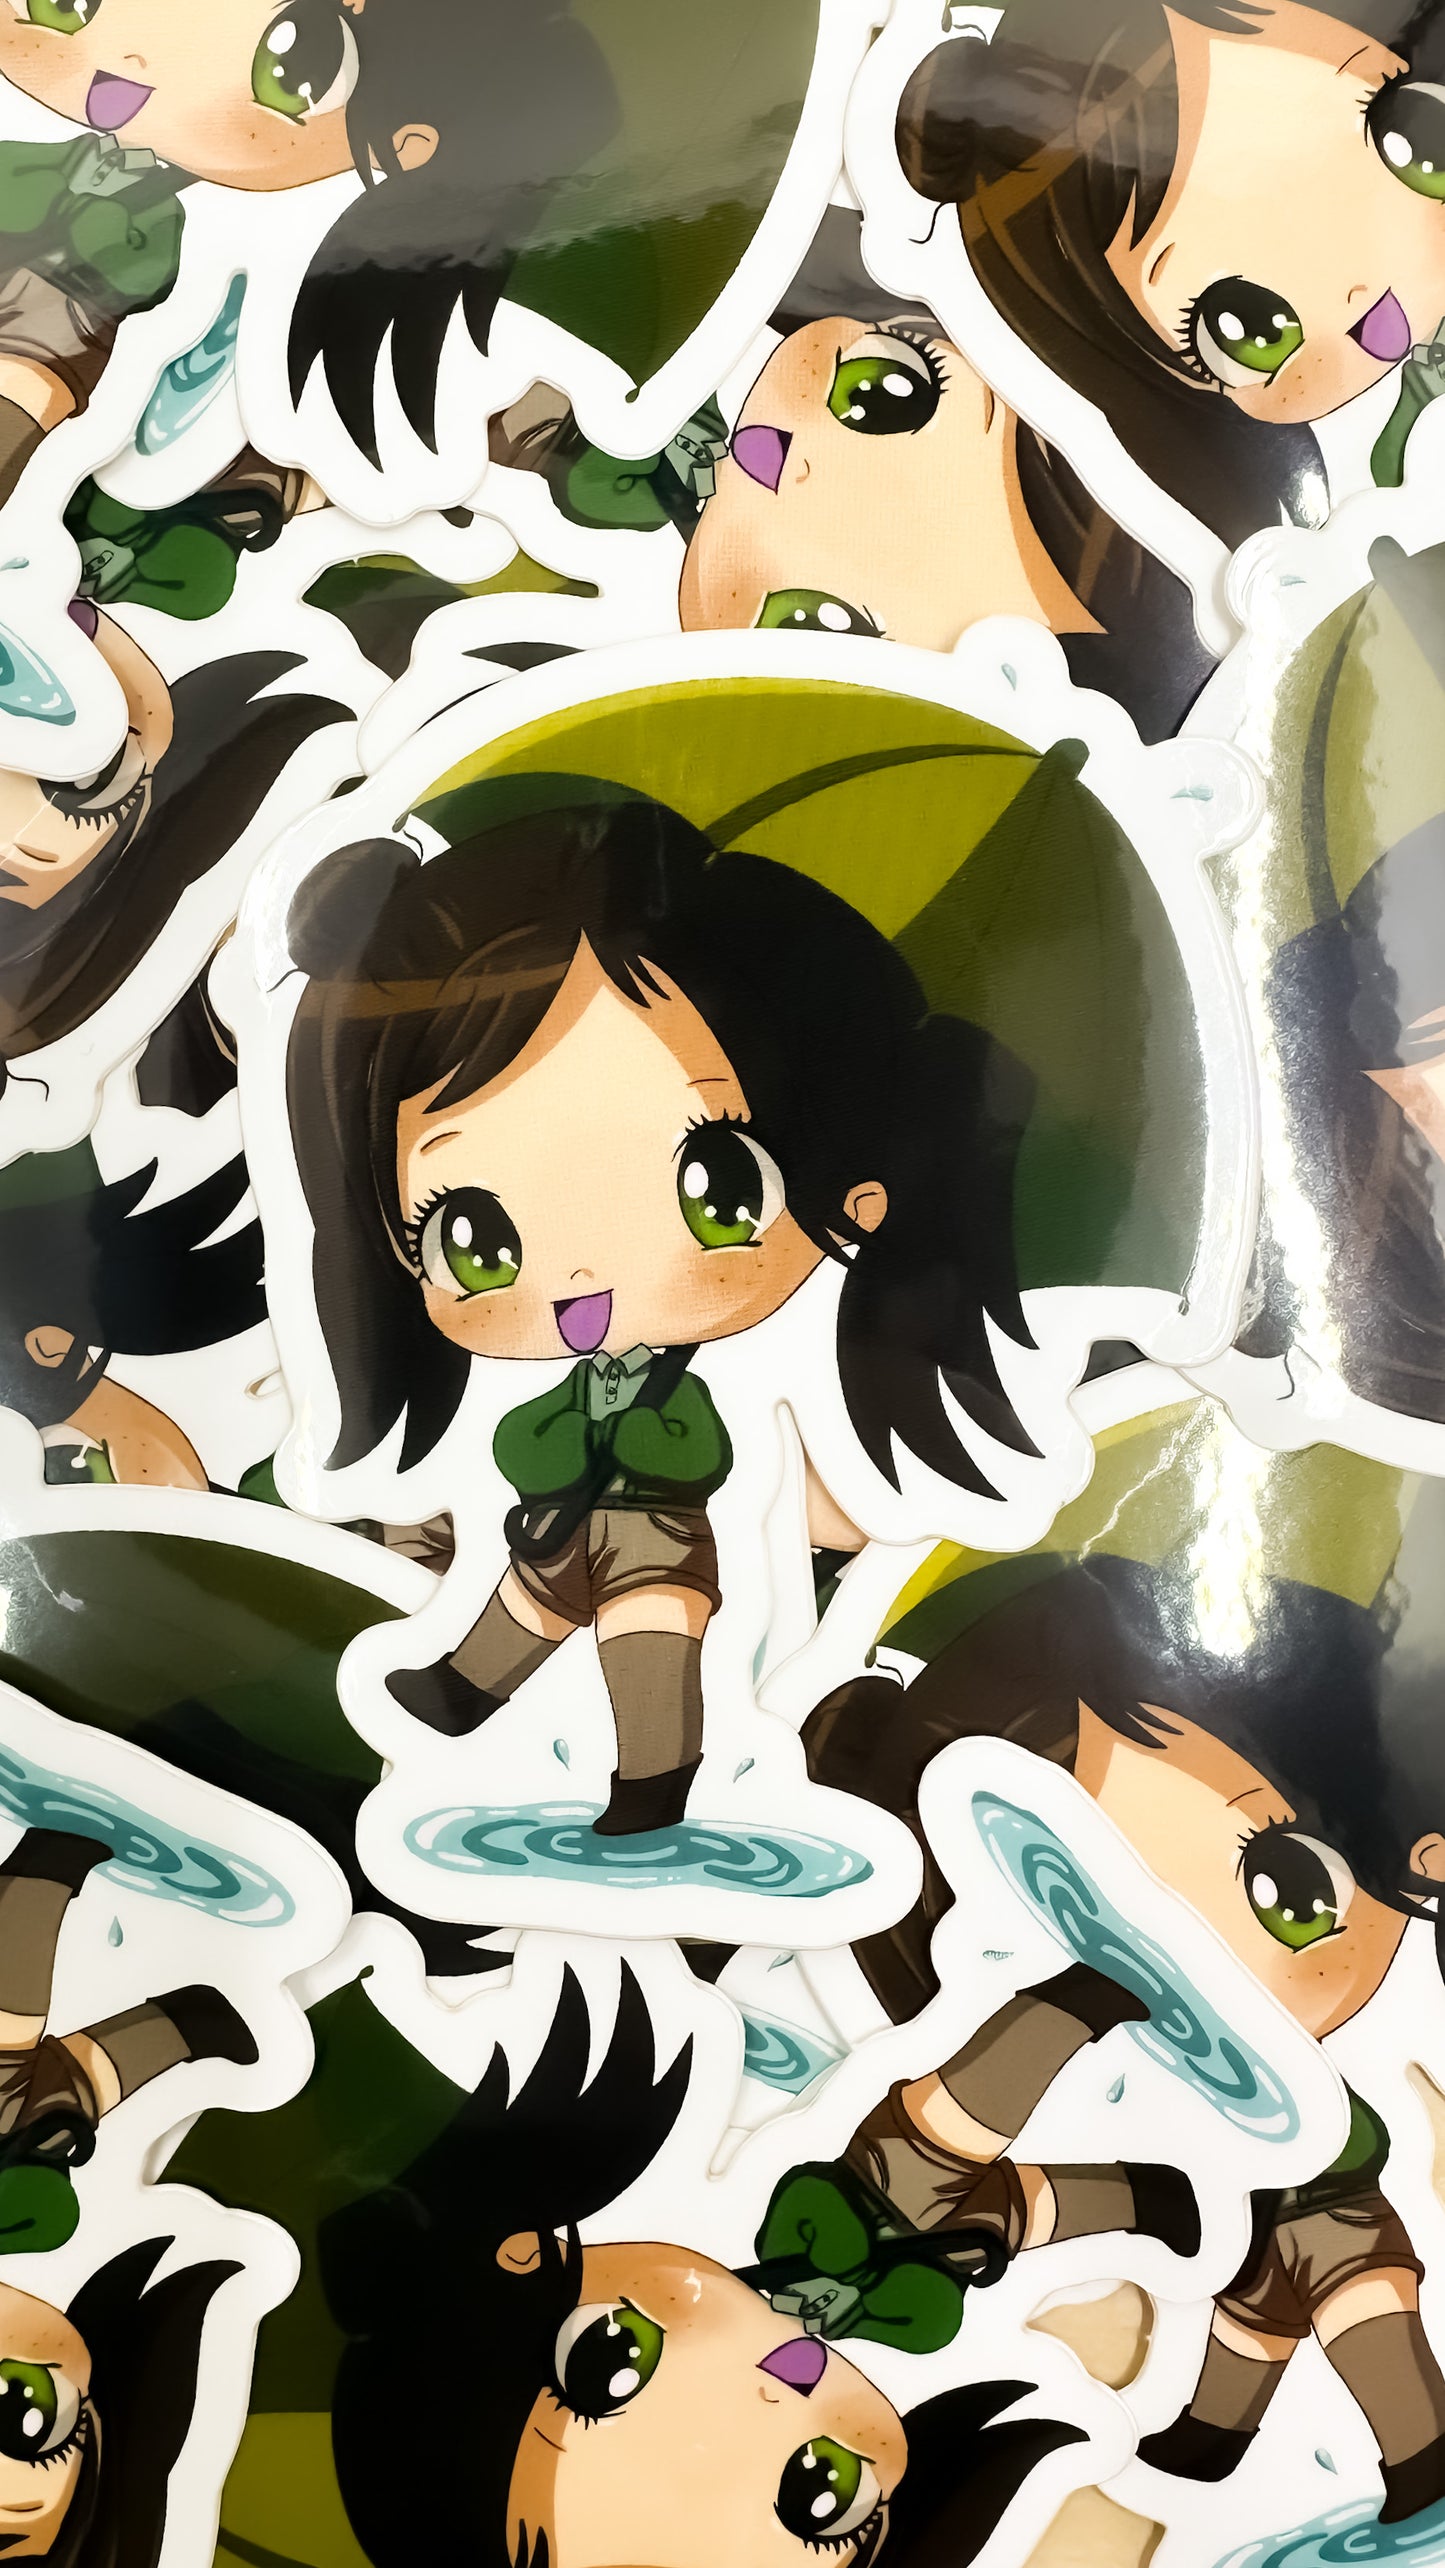 Umbrella Cute Chibi Girl Sticker Anime Illustrated Vinyl Glossy 3 inch